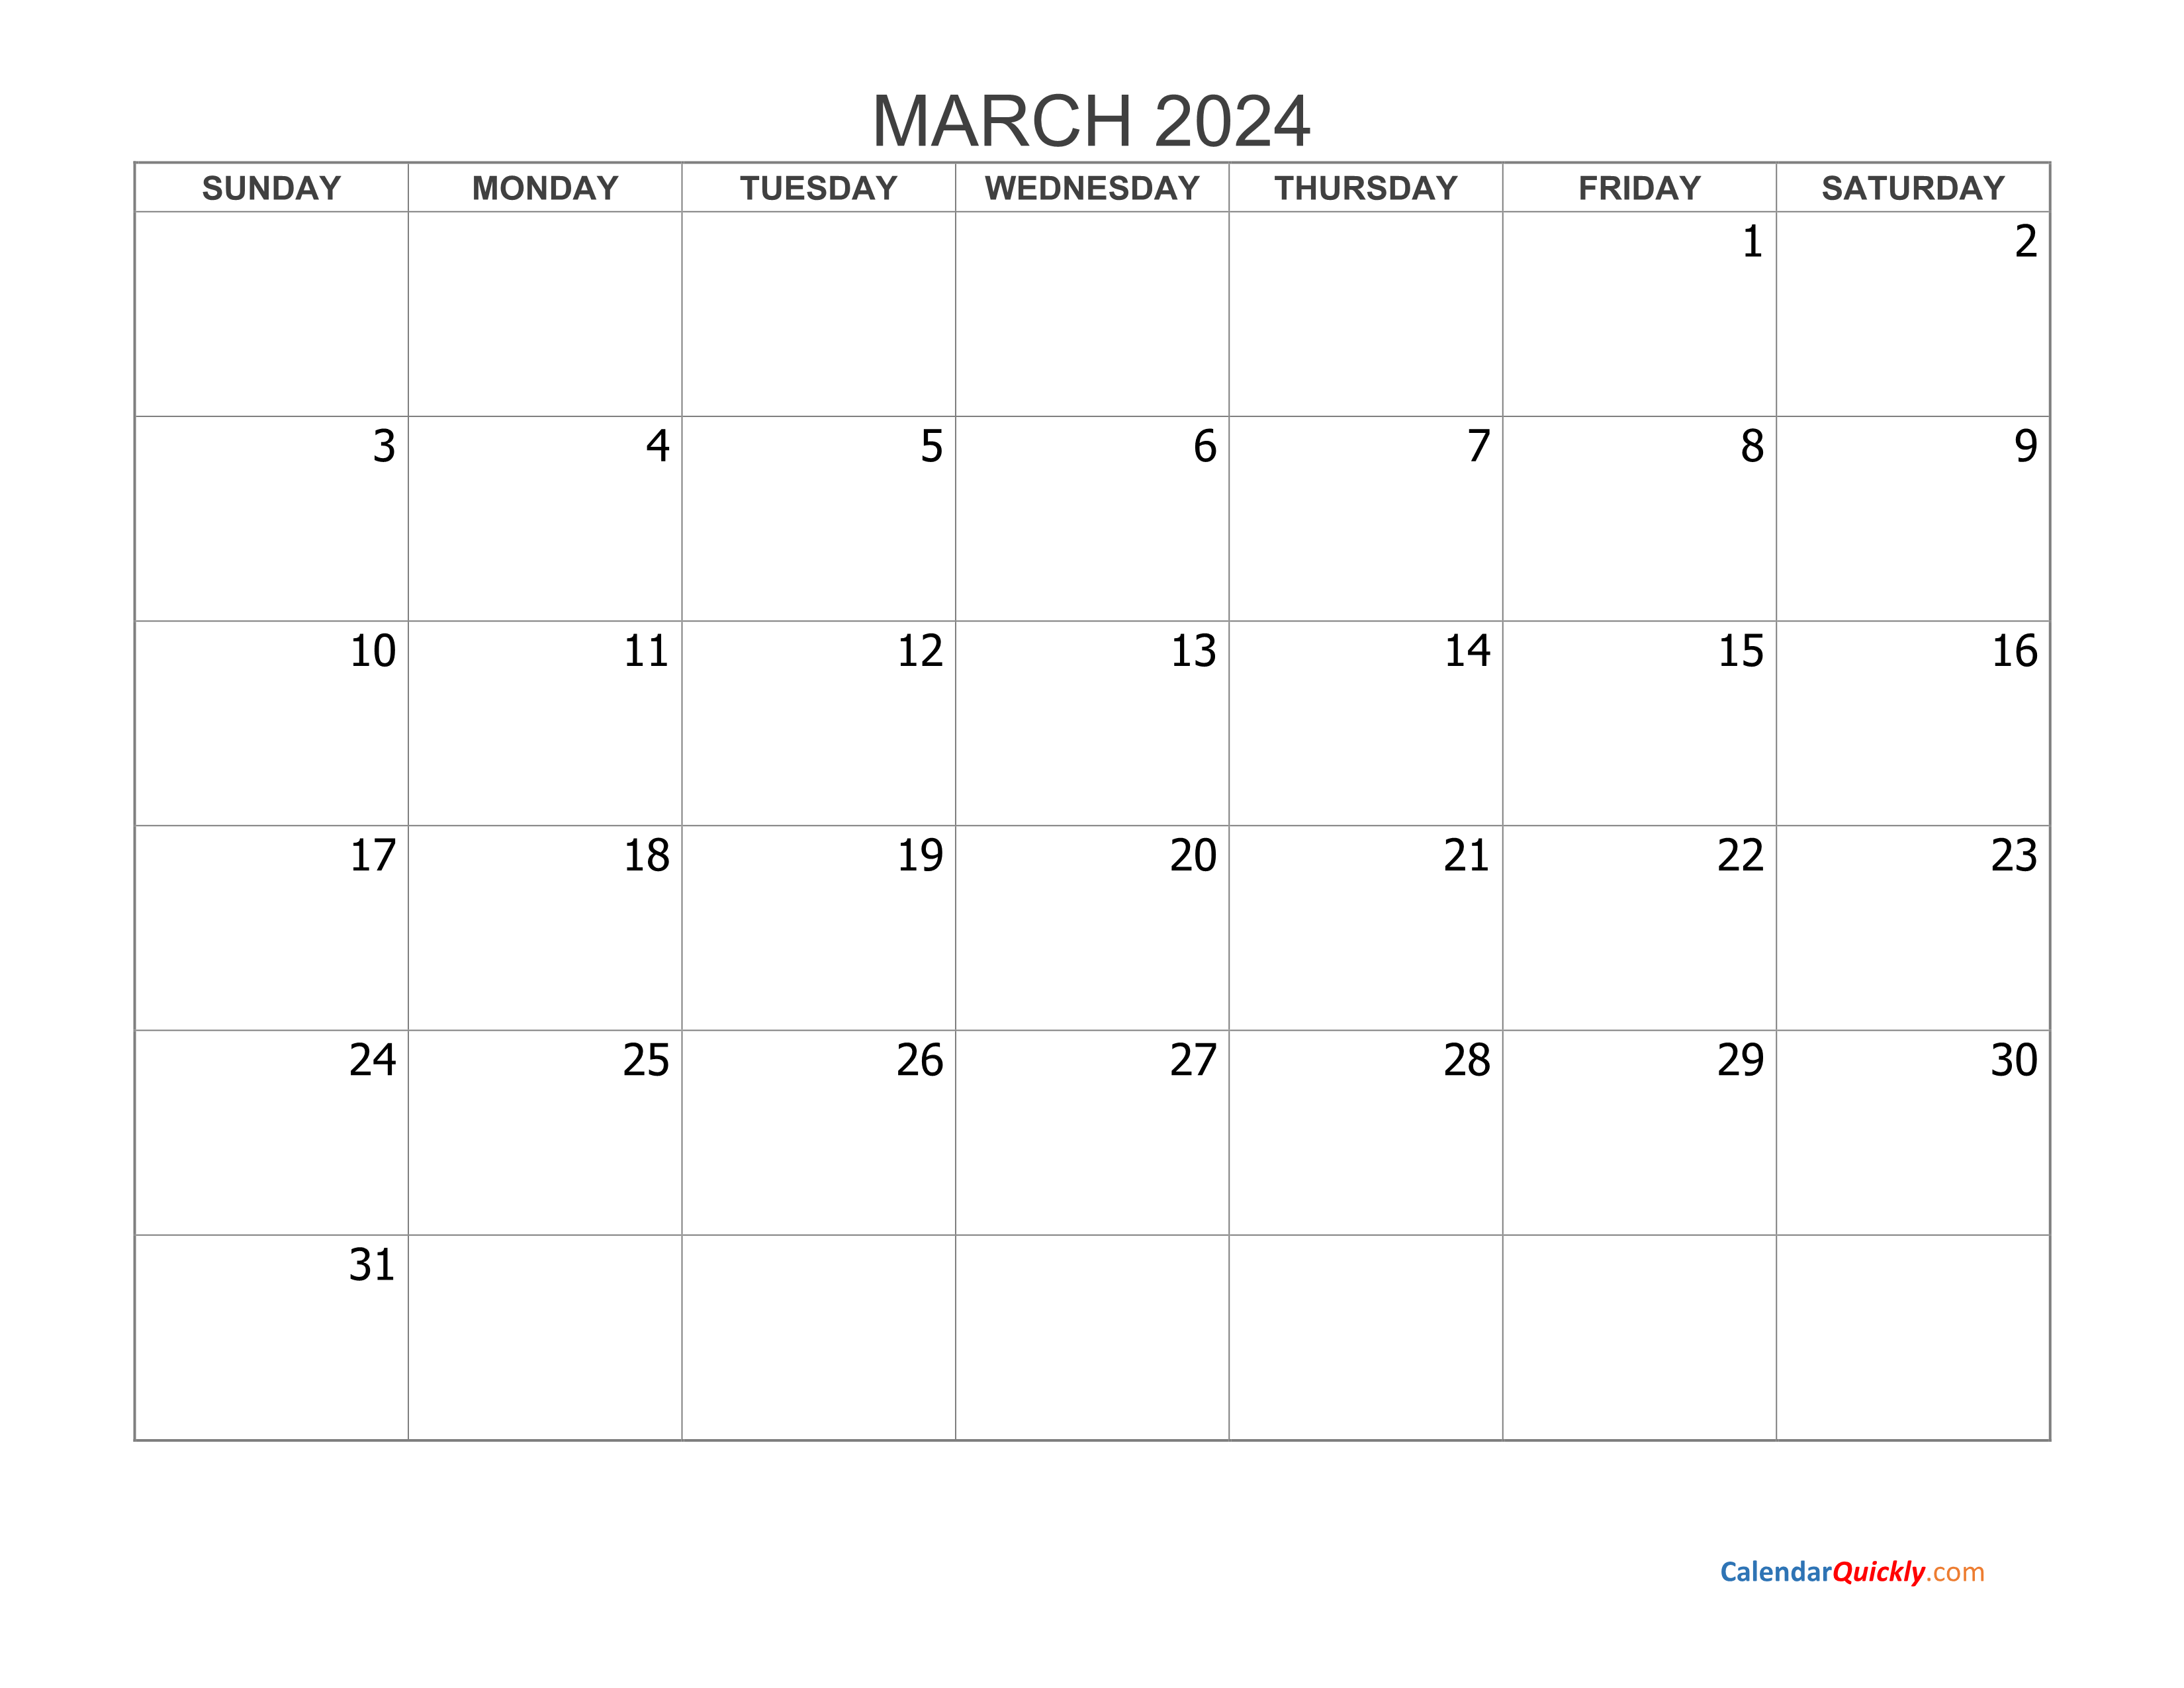 march-2024-blank-calendar-calendar-quickly